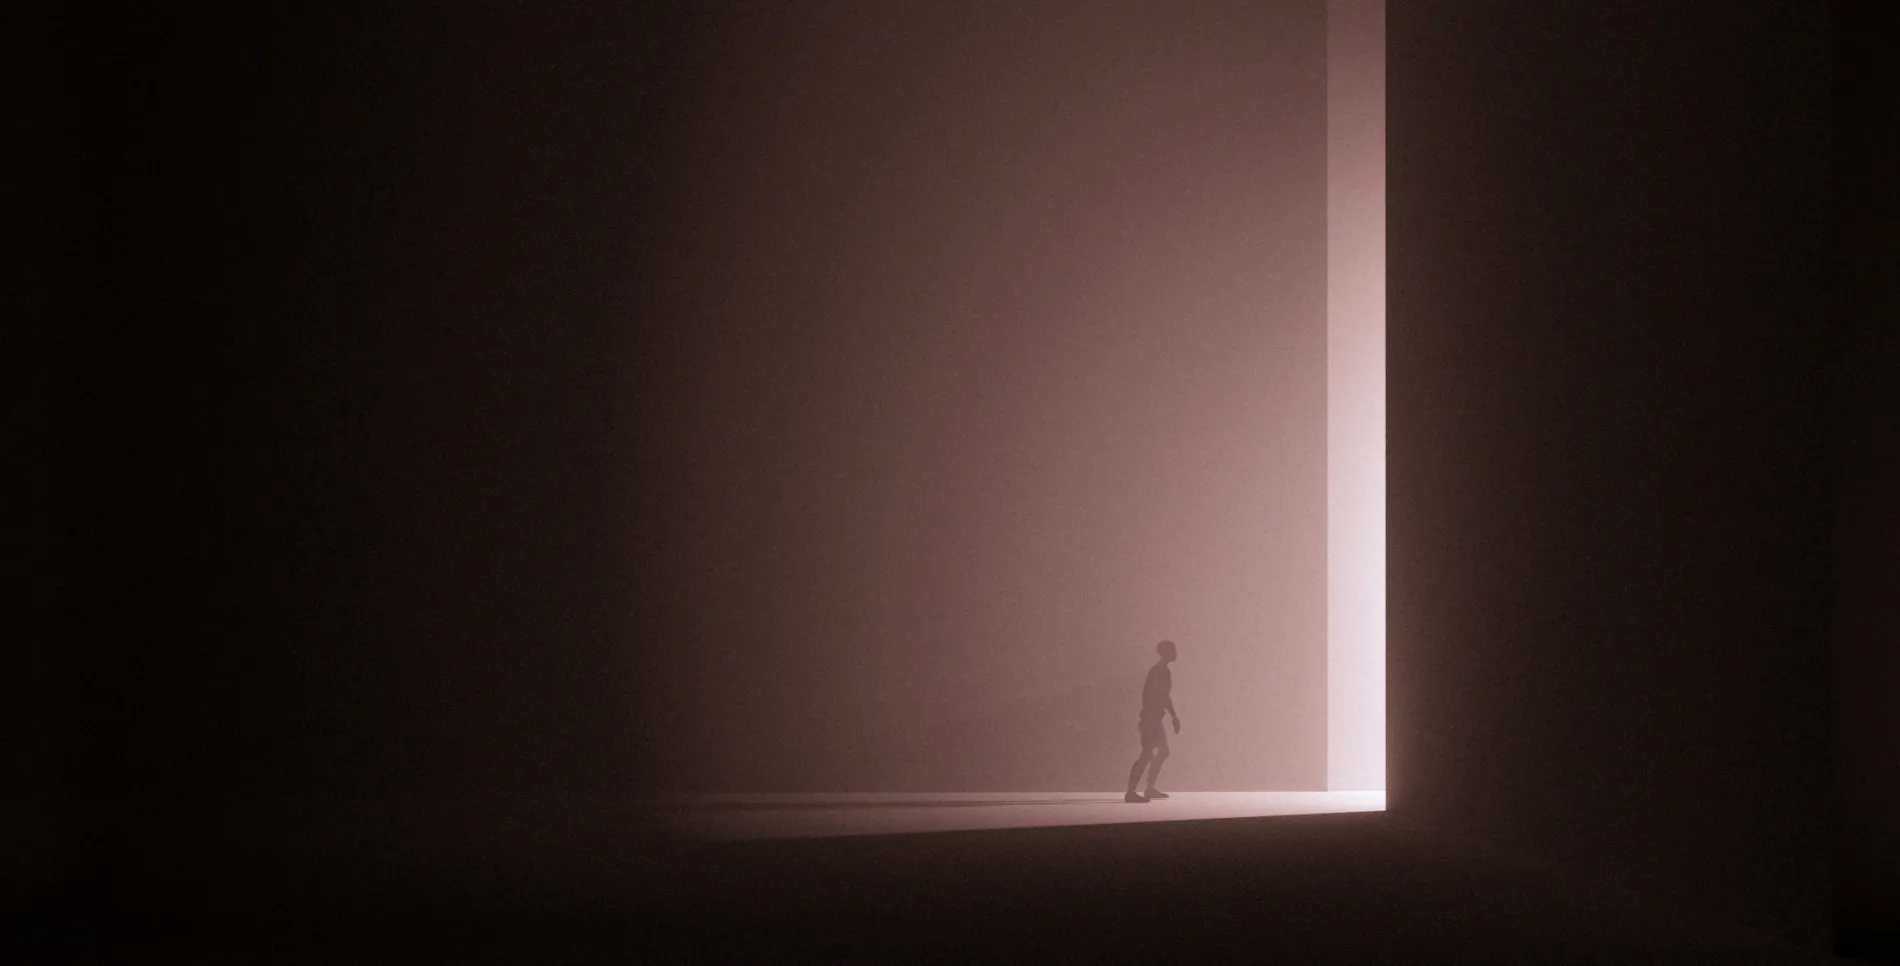 Digital rendering of person walking towards a light source